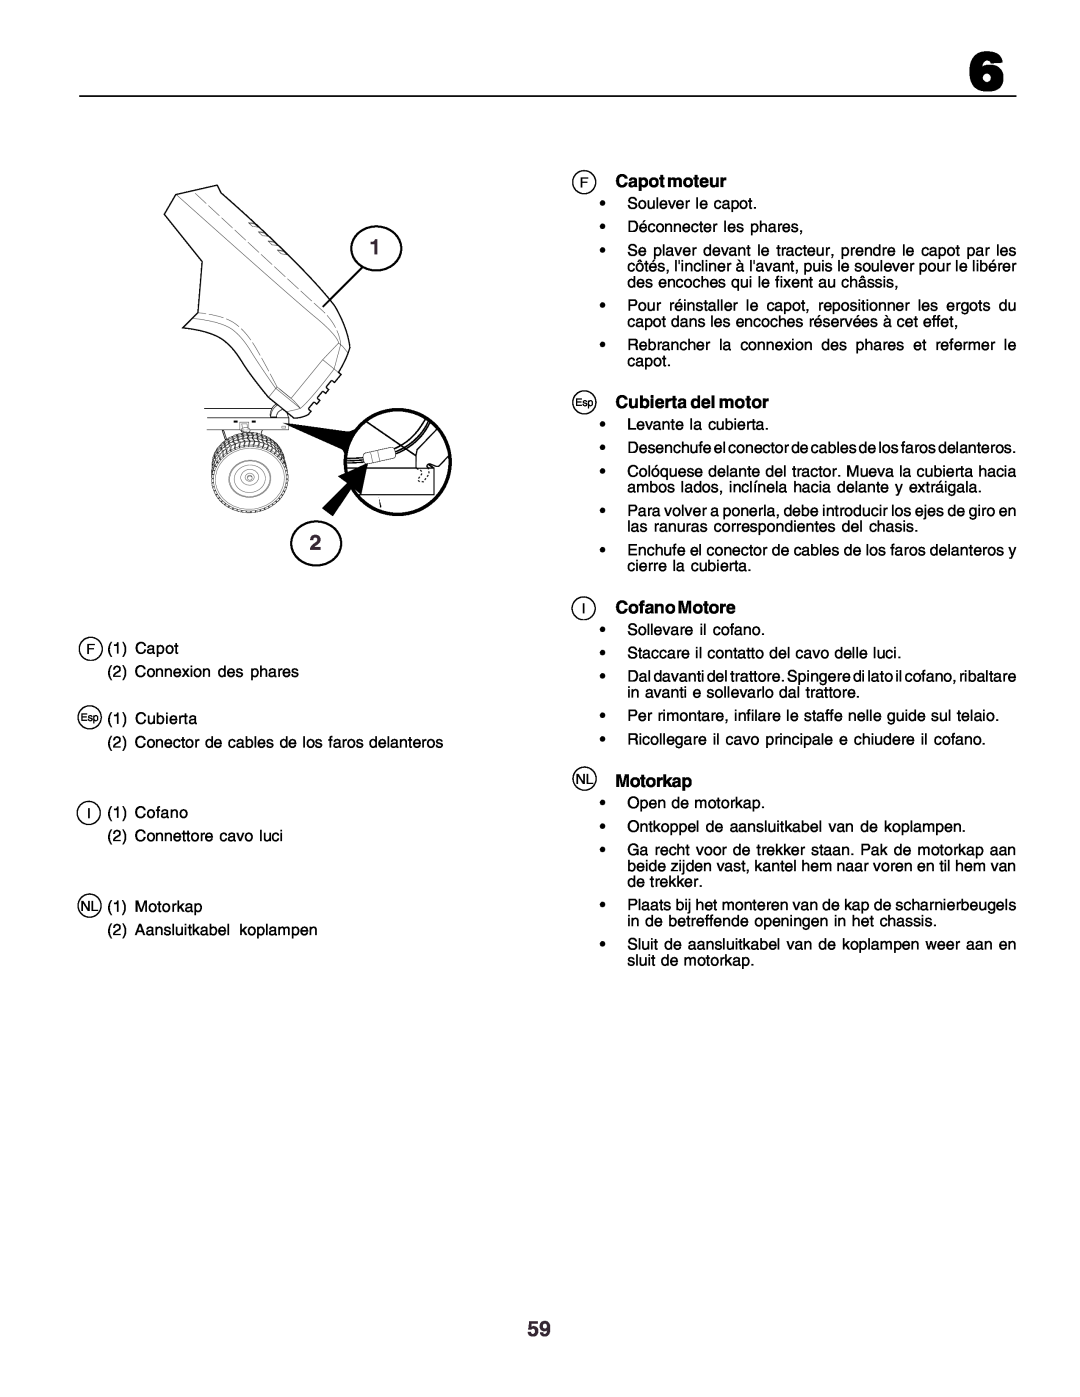 Husqvarna CT160 instruction manual FCapot moteur, Esp Cubierta del motor, ICofano Motore, NL Motorkap 